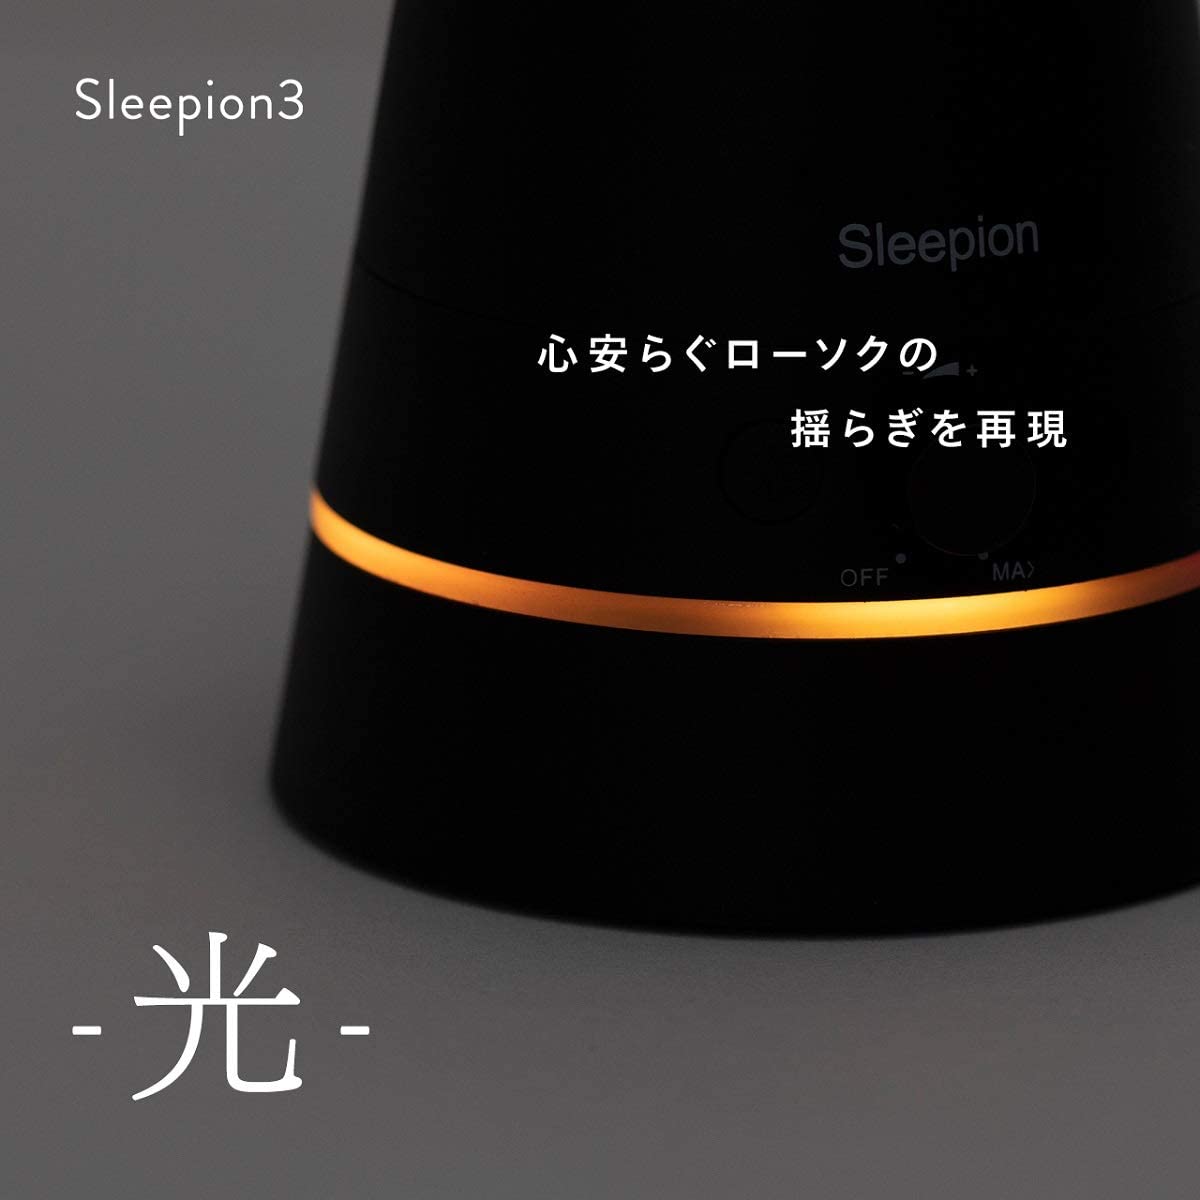 Sleepion3  専用バッテリー付き ホワイト